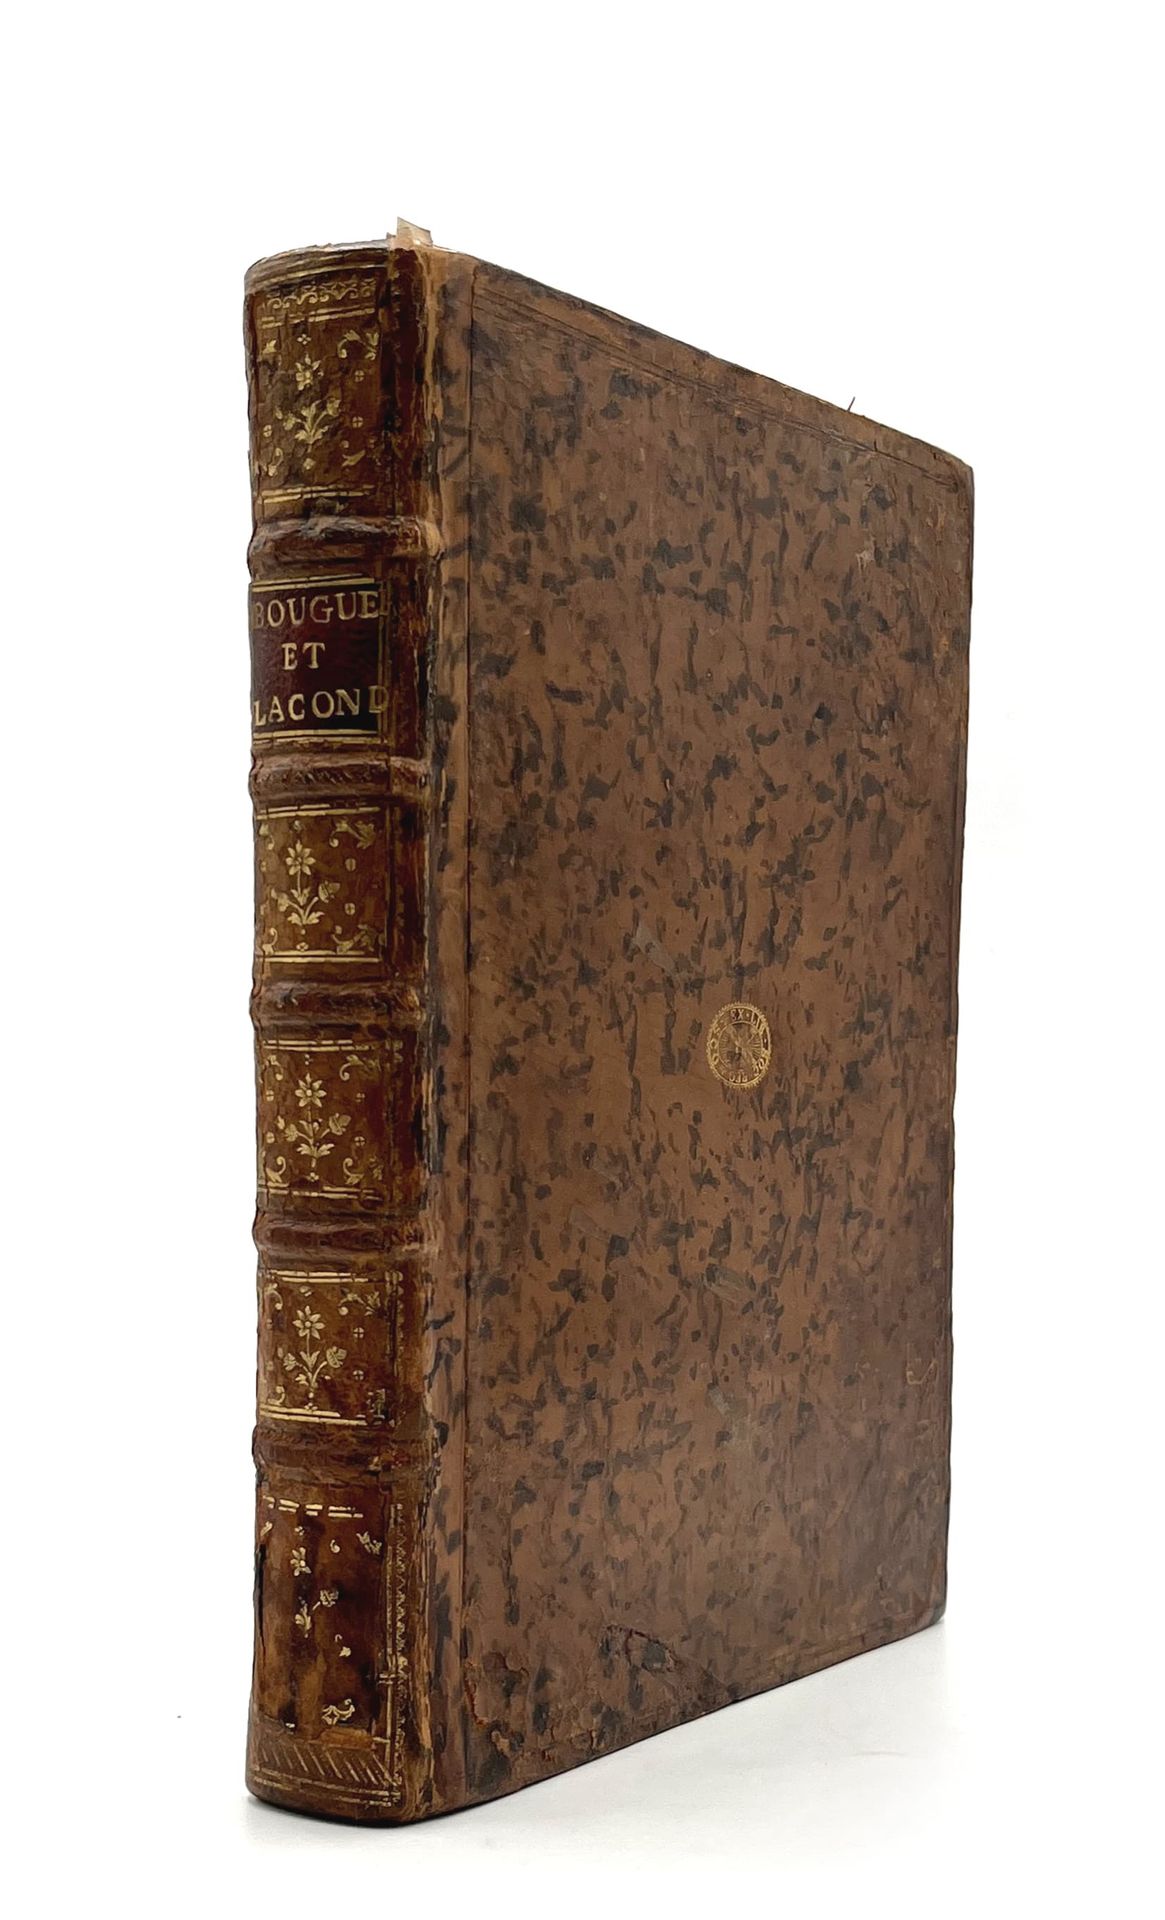 BOUGUER, Pierre & LA CONDAMINE, Charles Marie de 1744年皇家科学院的回忆录的论证。以及根据在秘鲁的观测结果确&hellip;